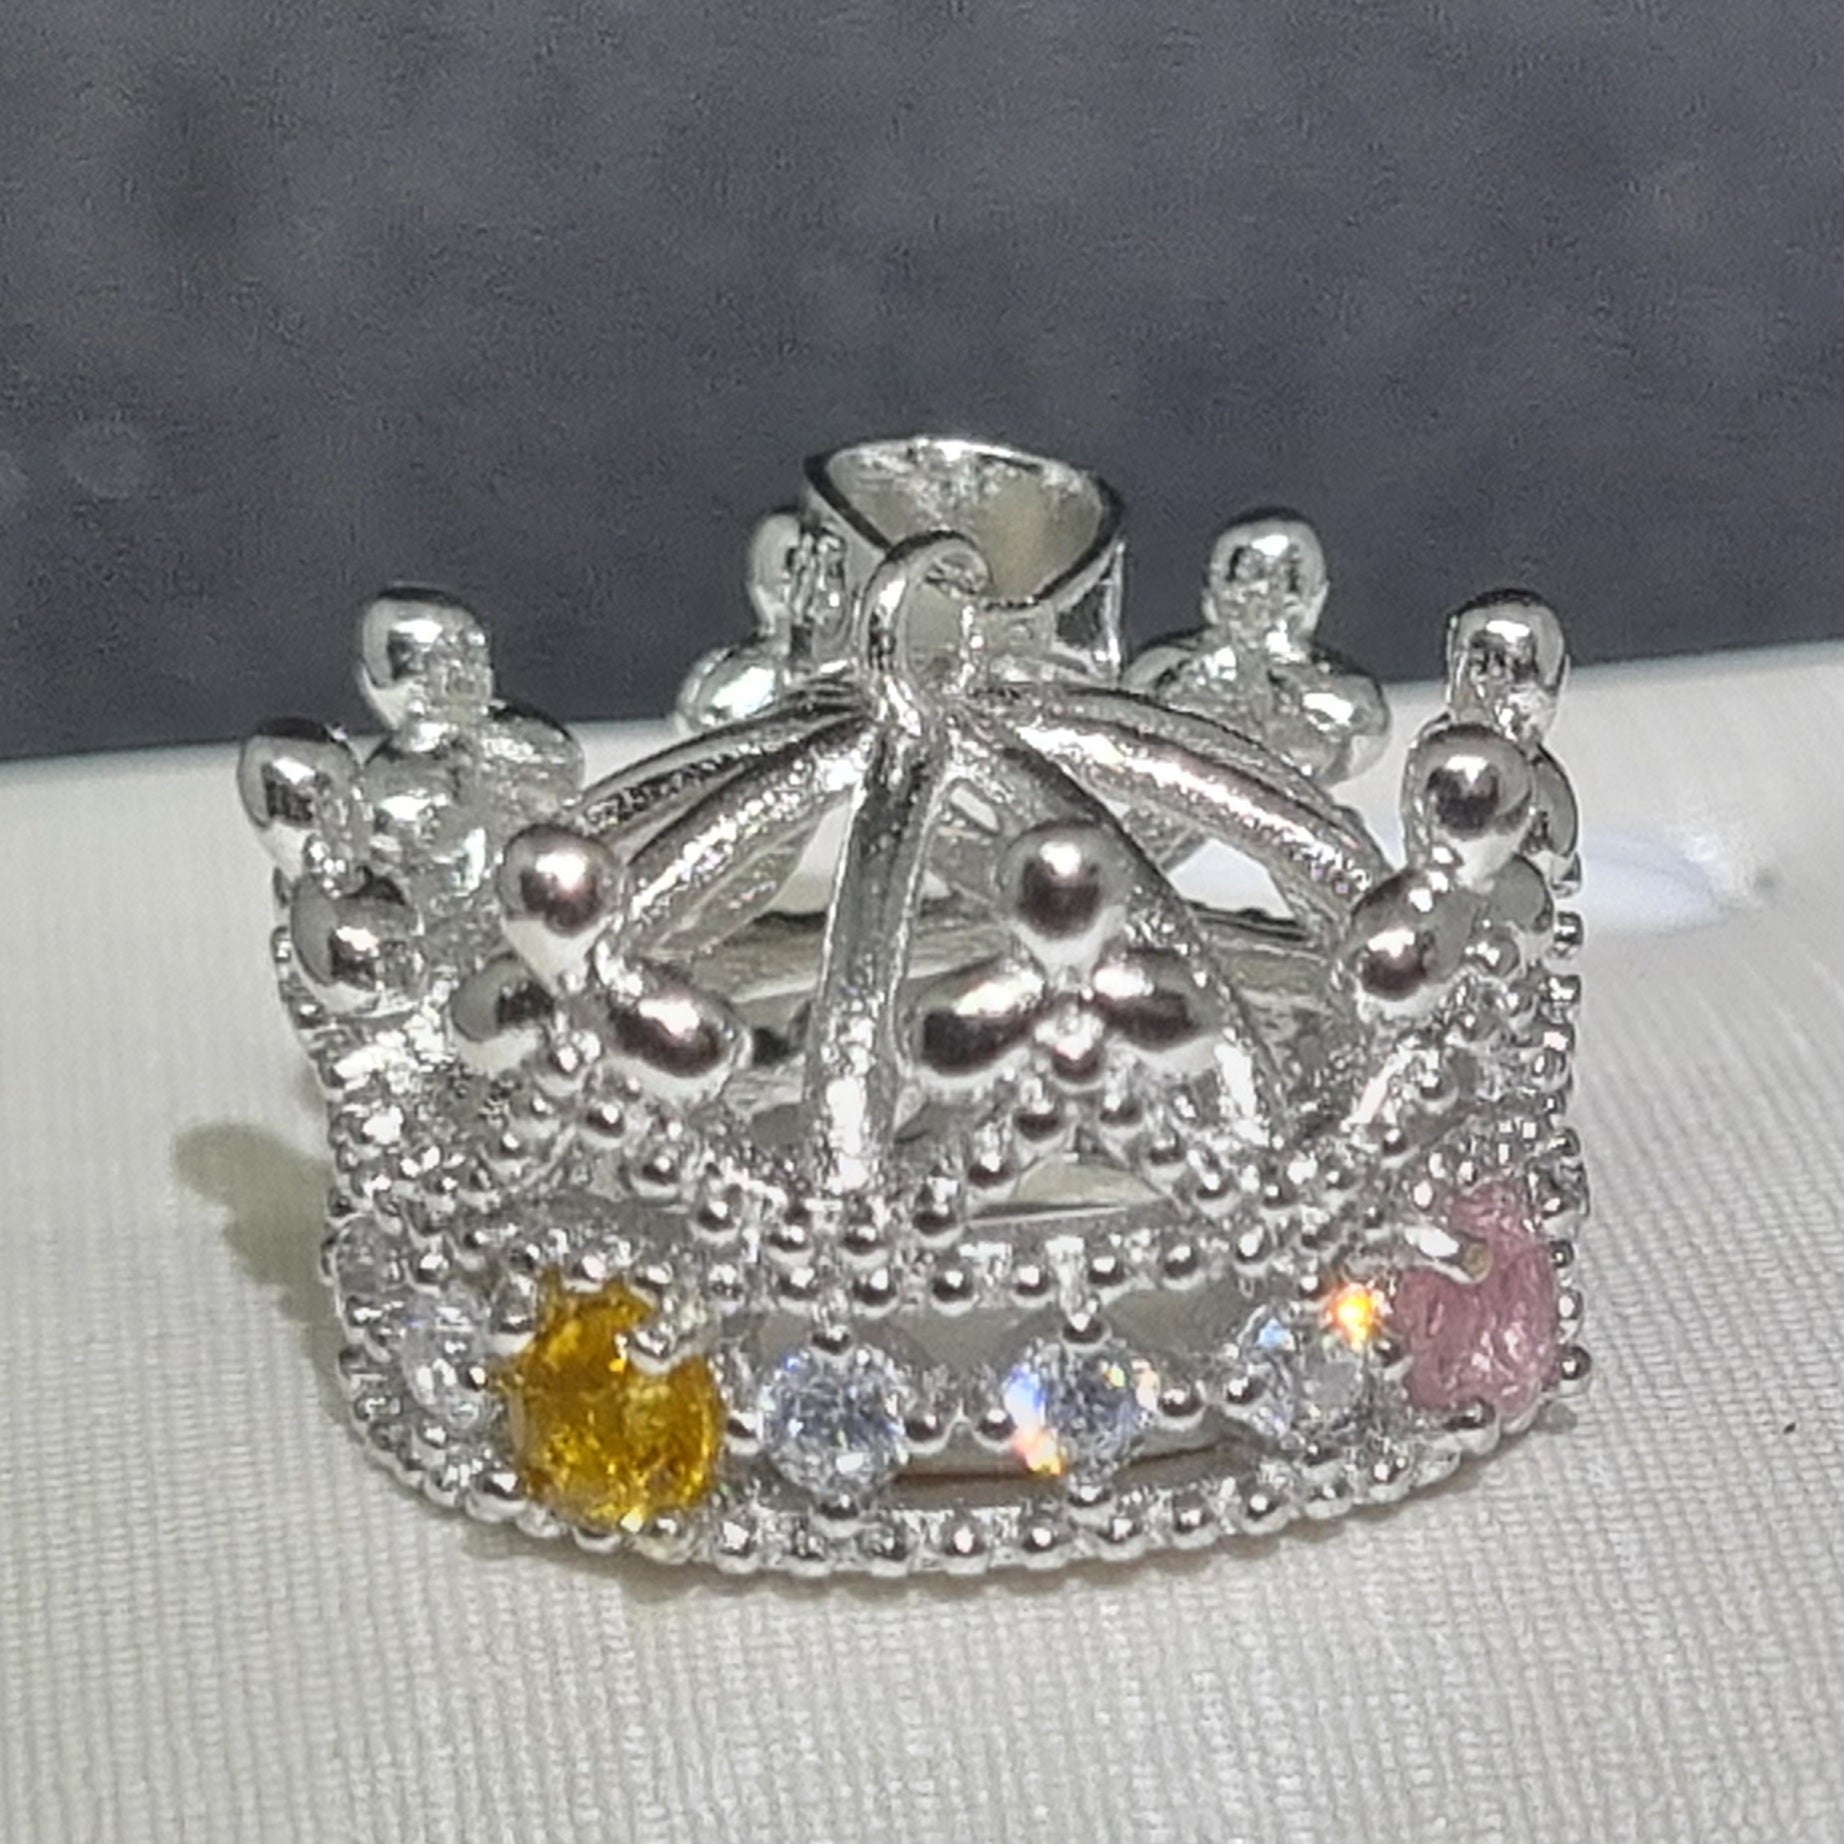 P0055 - Crown Pendant